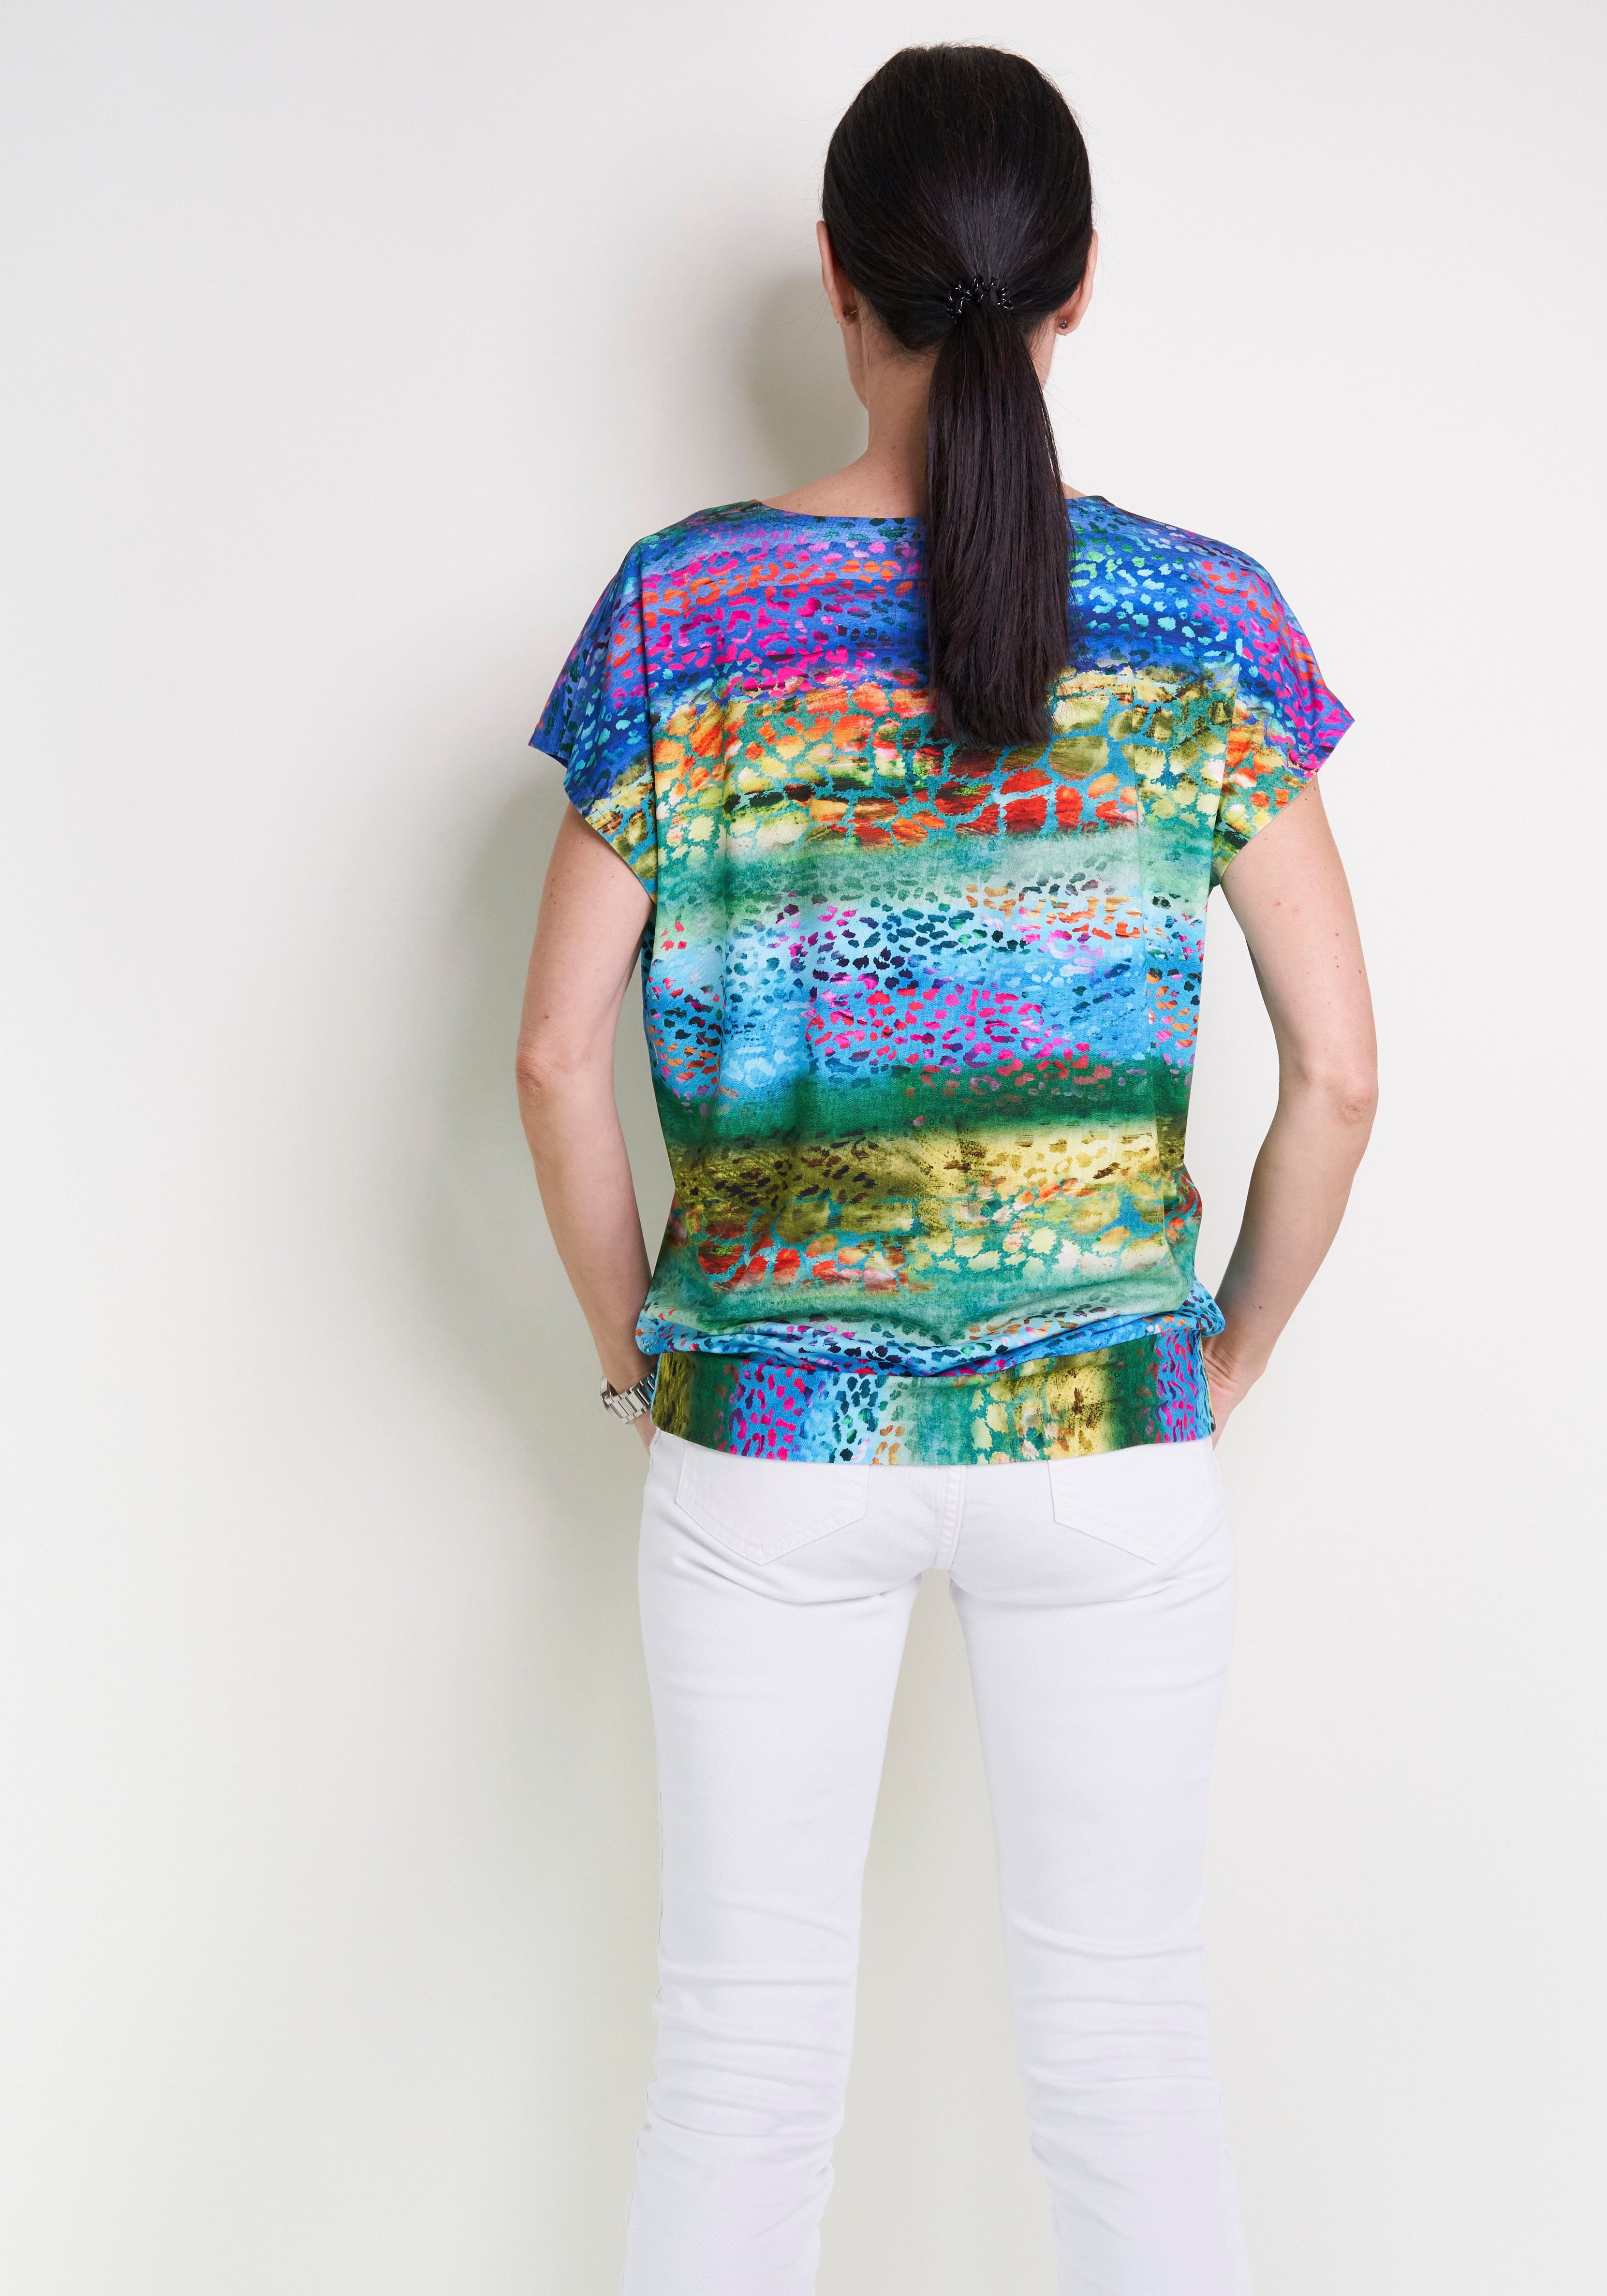 Seidel Moden Blusenshirt mit buntem Allover-Muster, MADE IN GERMANY online  kaufen | OTTO